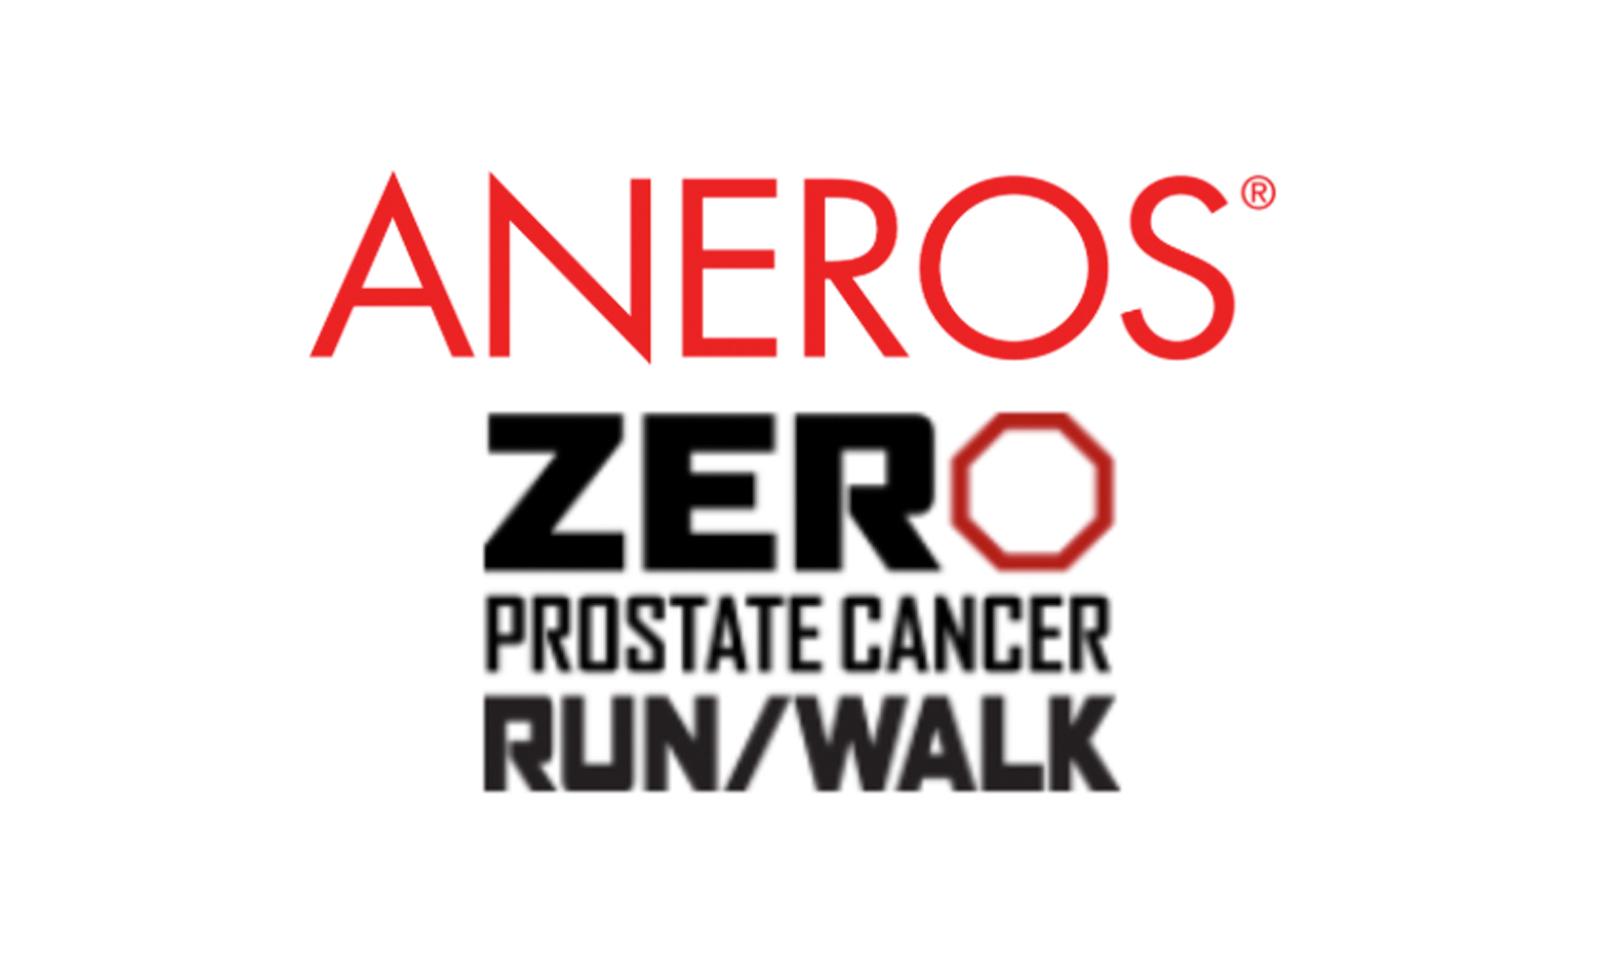 Aneros Raises Funds, Awareness at 2019 ZERO Prostate Cancer Run